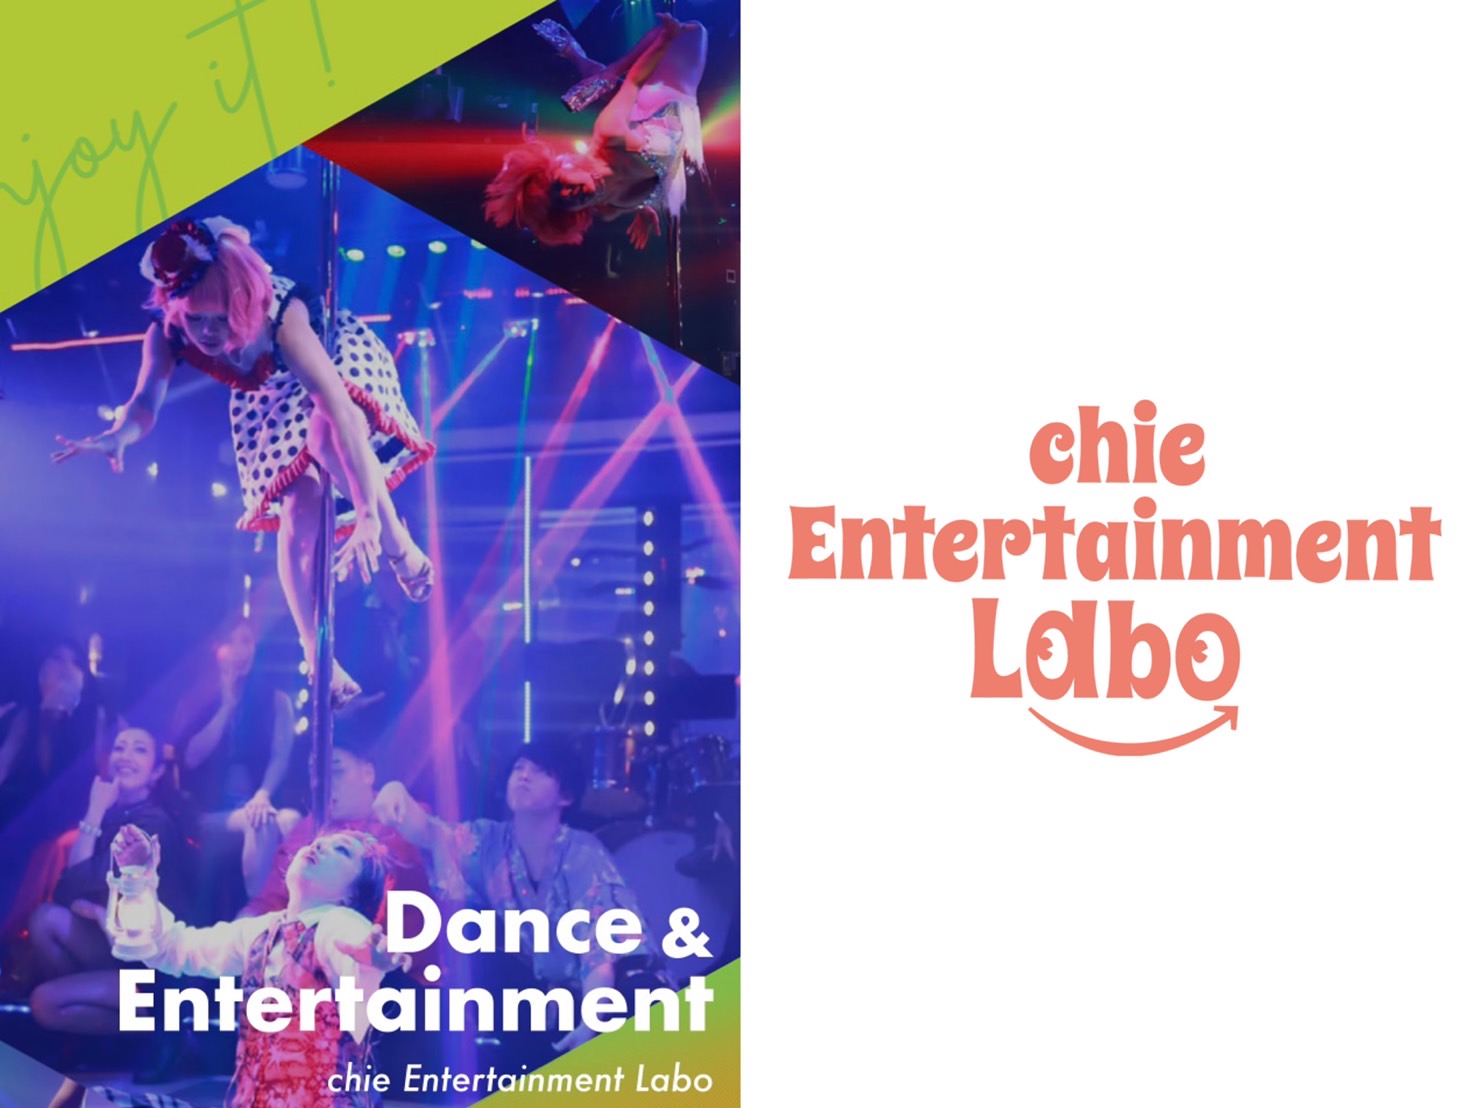 chie Entertainment Labo 十条スタジオ